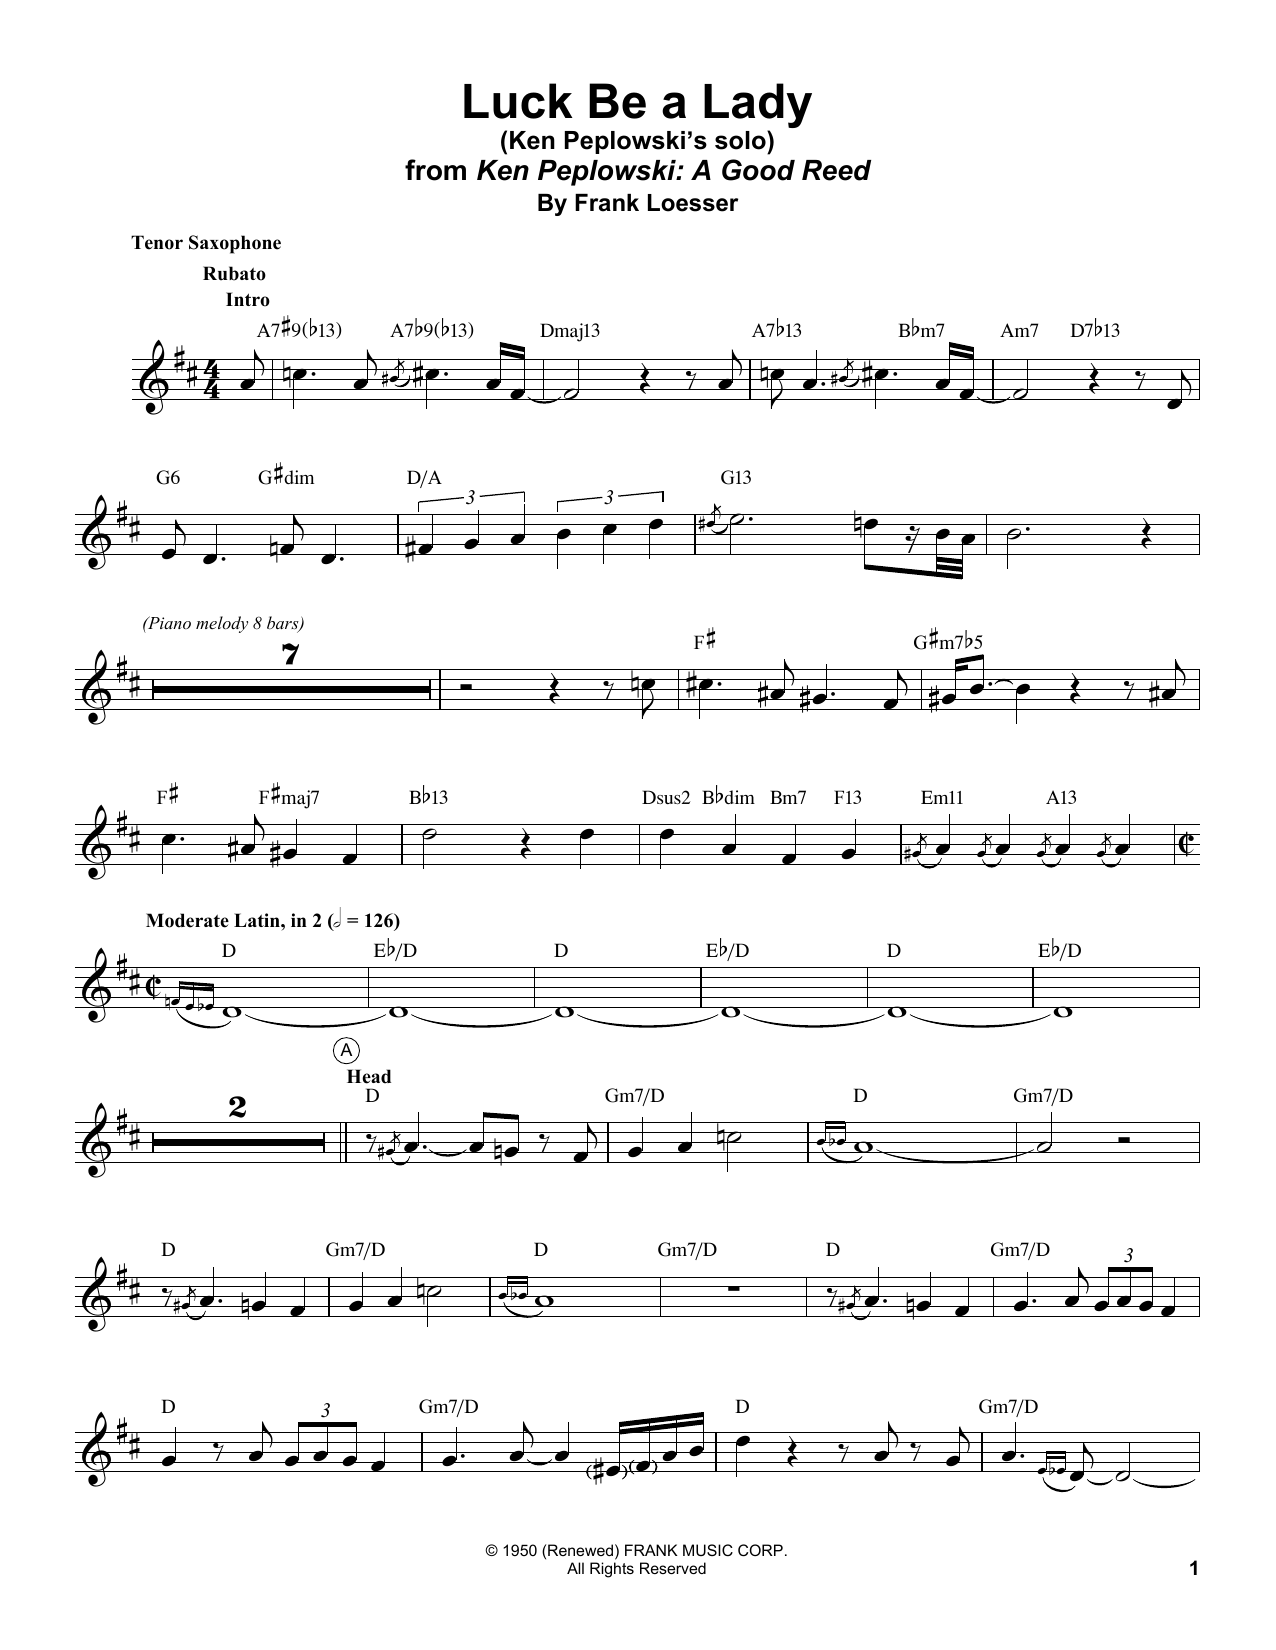 Ken Peplowski Luck Be A Lady Sheet Music Notes & Chords for Tenor Sax Transcription - Download or Print PDF